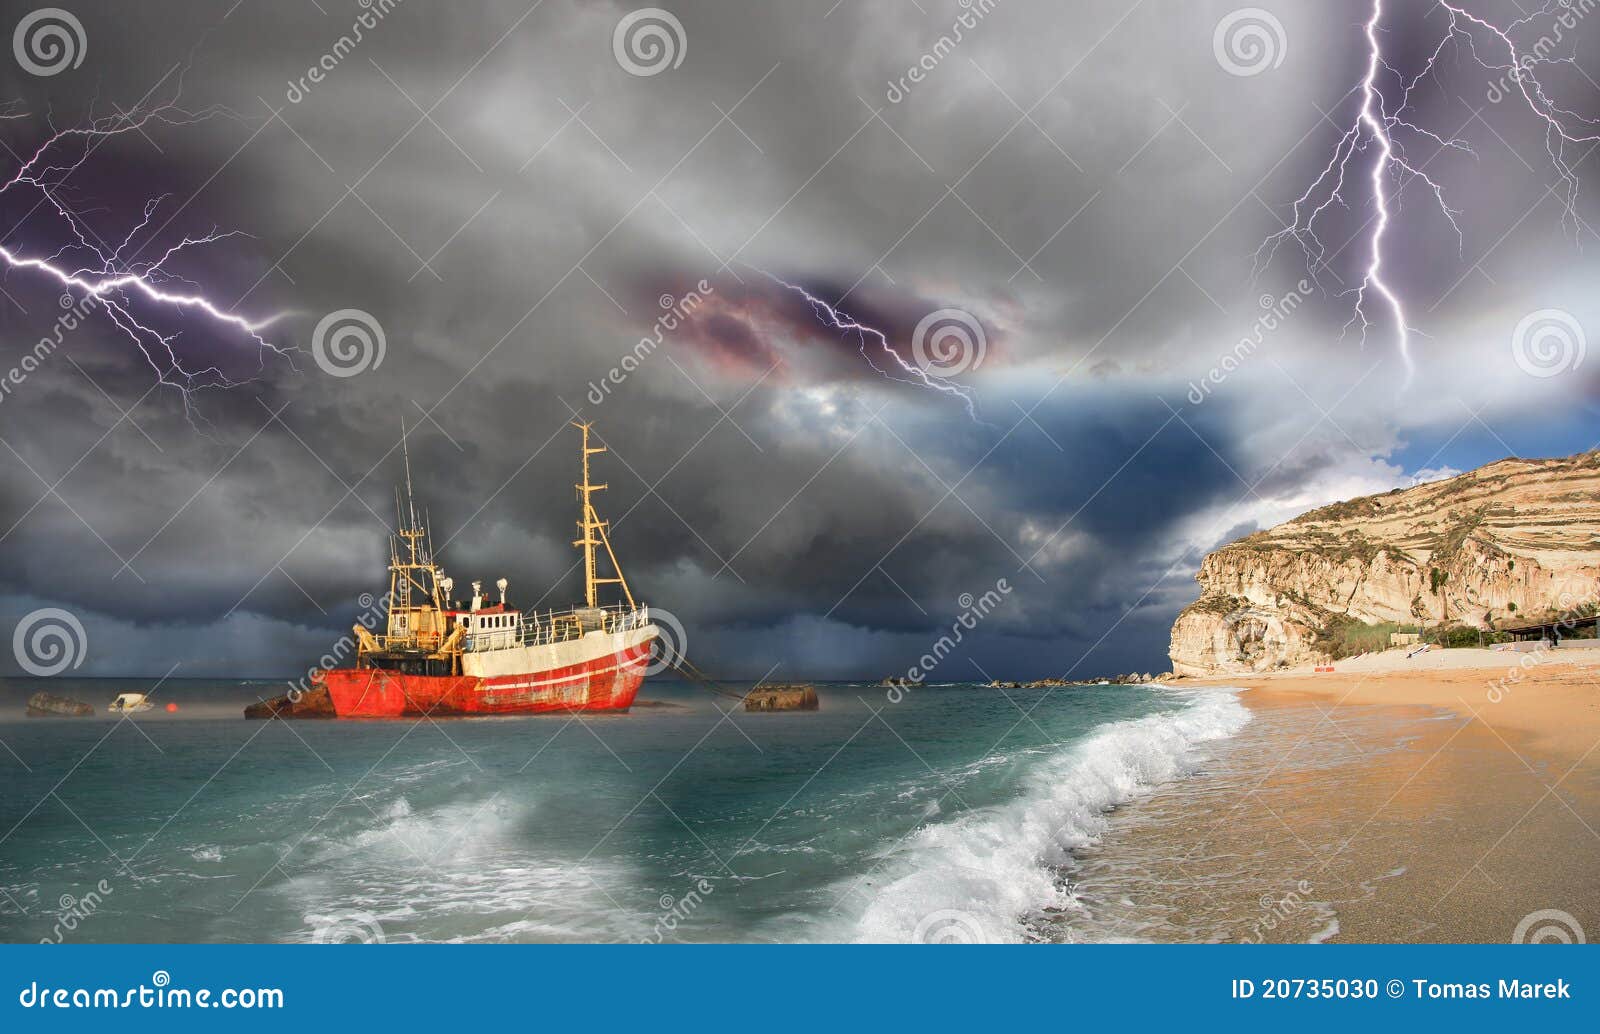 6,326 Fishing Boat Storm Stock Photos - Free & Royalty-Free Stock